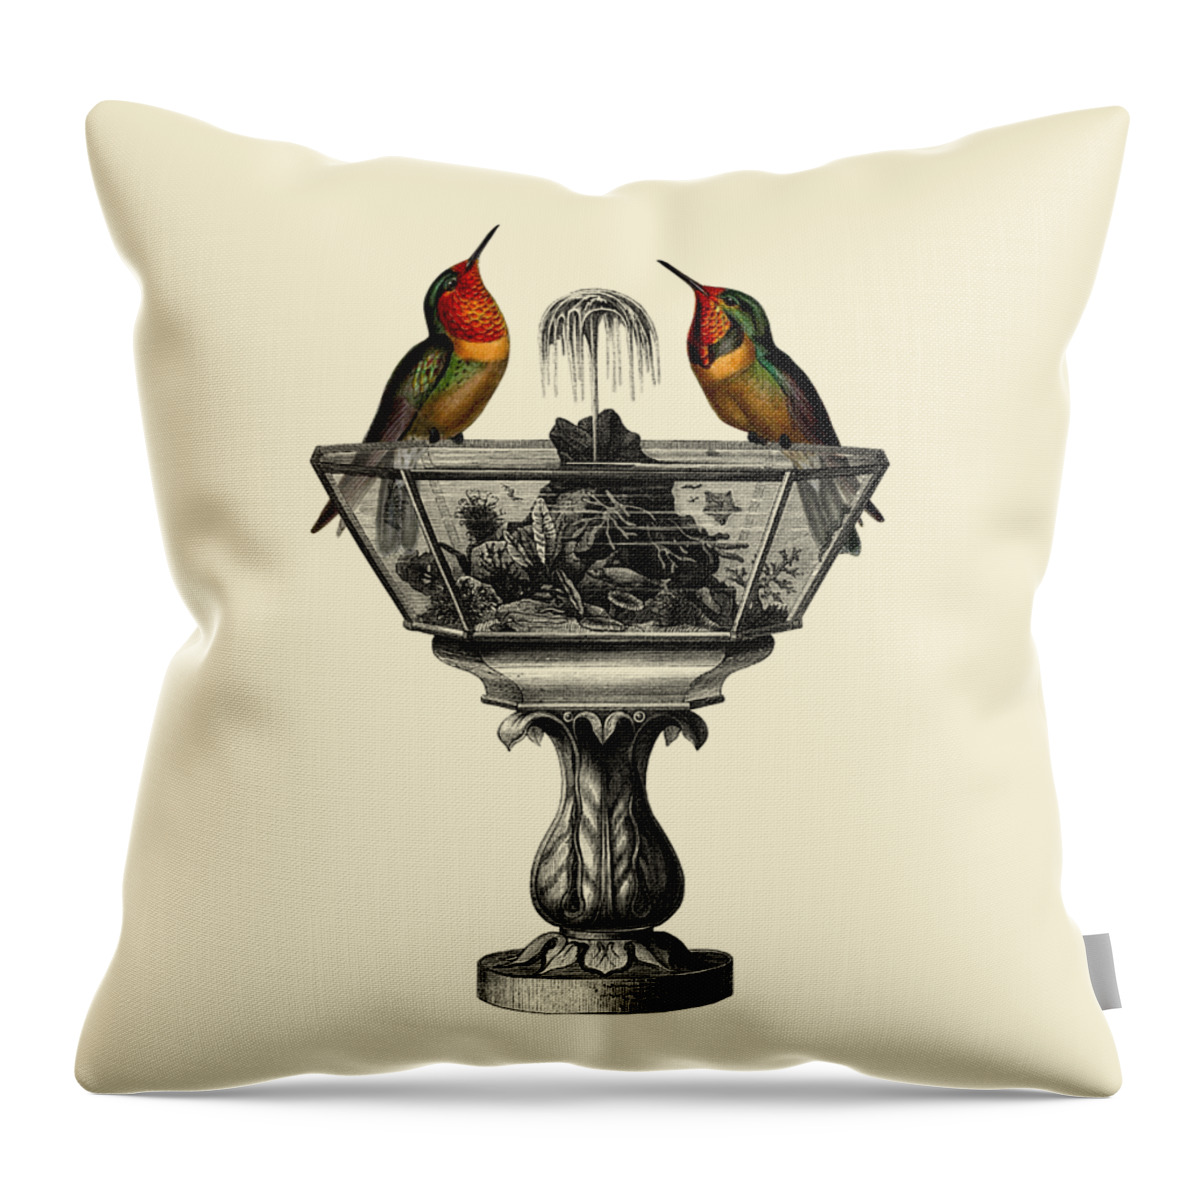 Hummingbird Throw Pillow featuring the digital art Victorian hummingbirds by Madame Memento